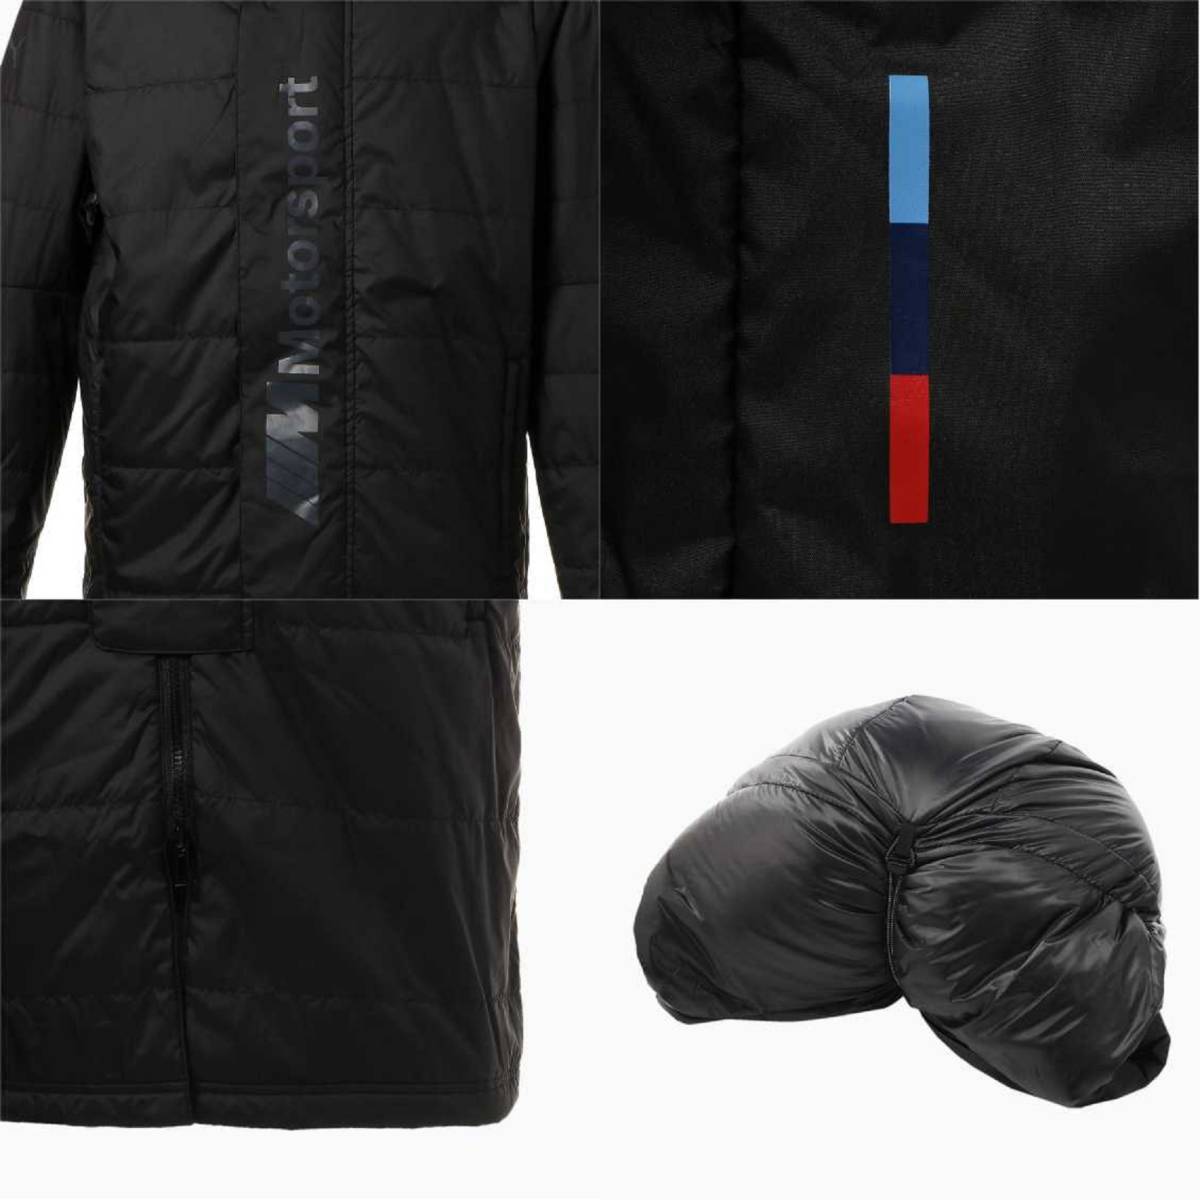  Puma BMW collaboration MMS RCT coat US size M Japan size L corresponding regular price 19800 jpy black black men's cotton inside jacket outer 